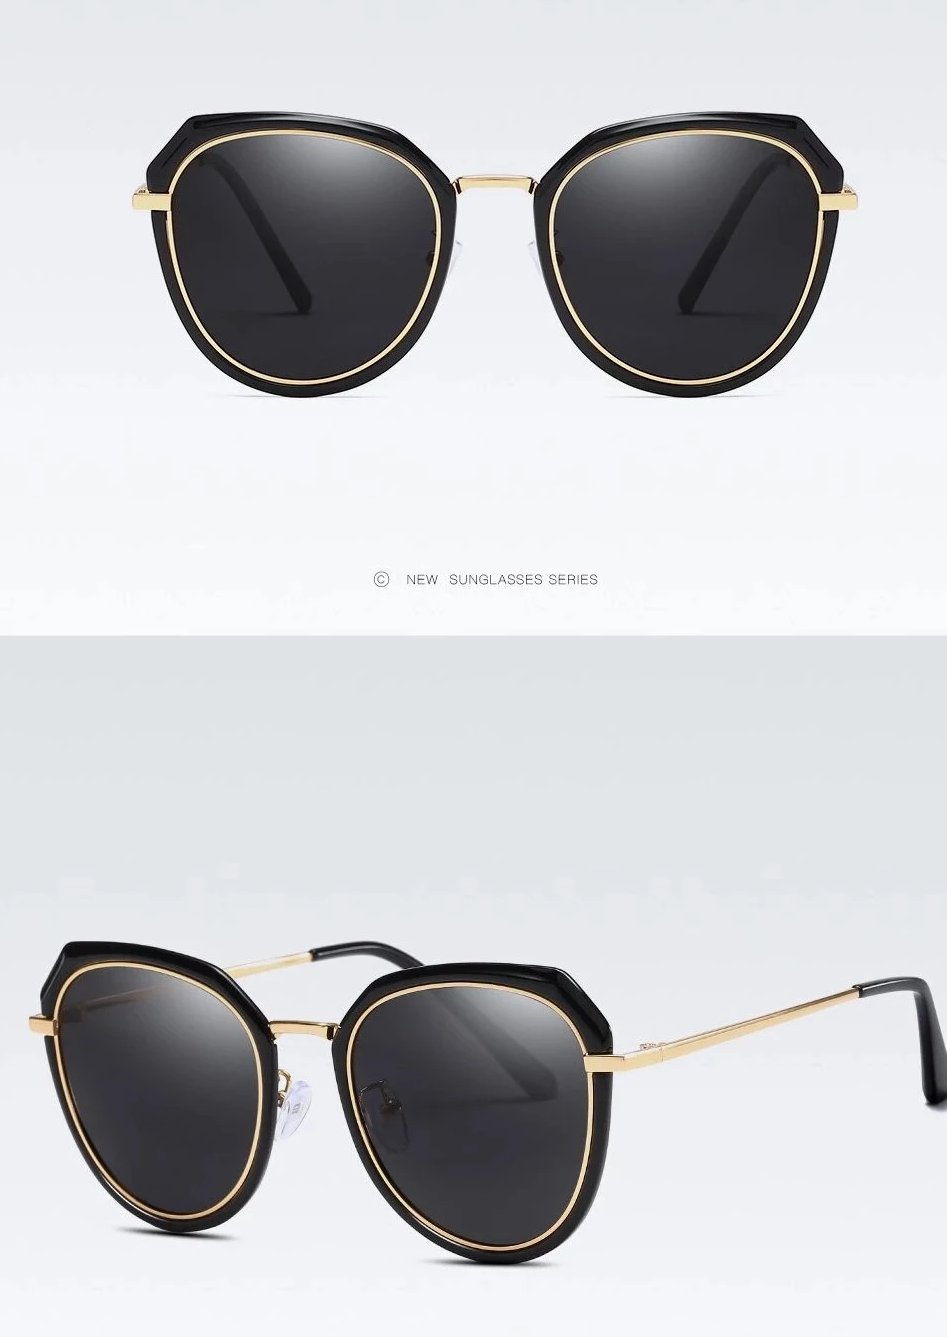 Stylish Vintage Mirror Sunglasses For Women-Unique and Classy